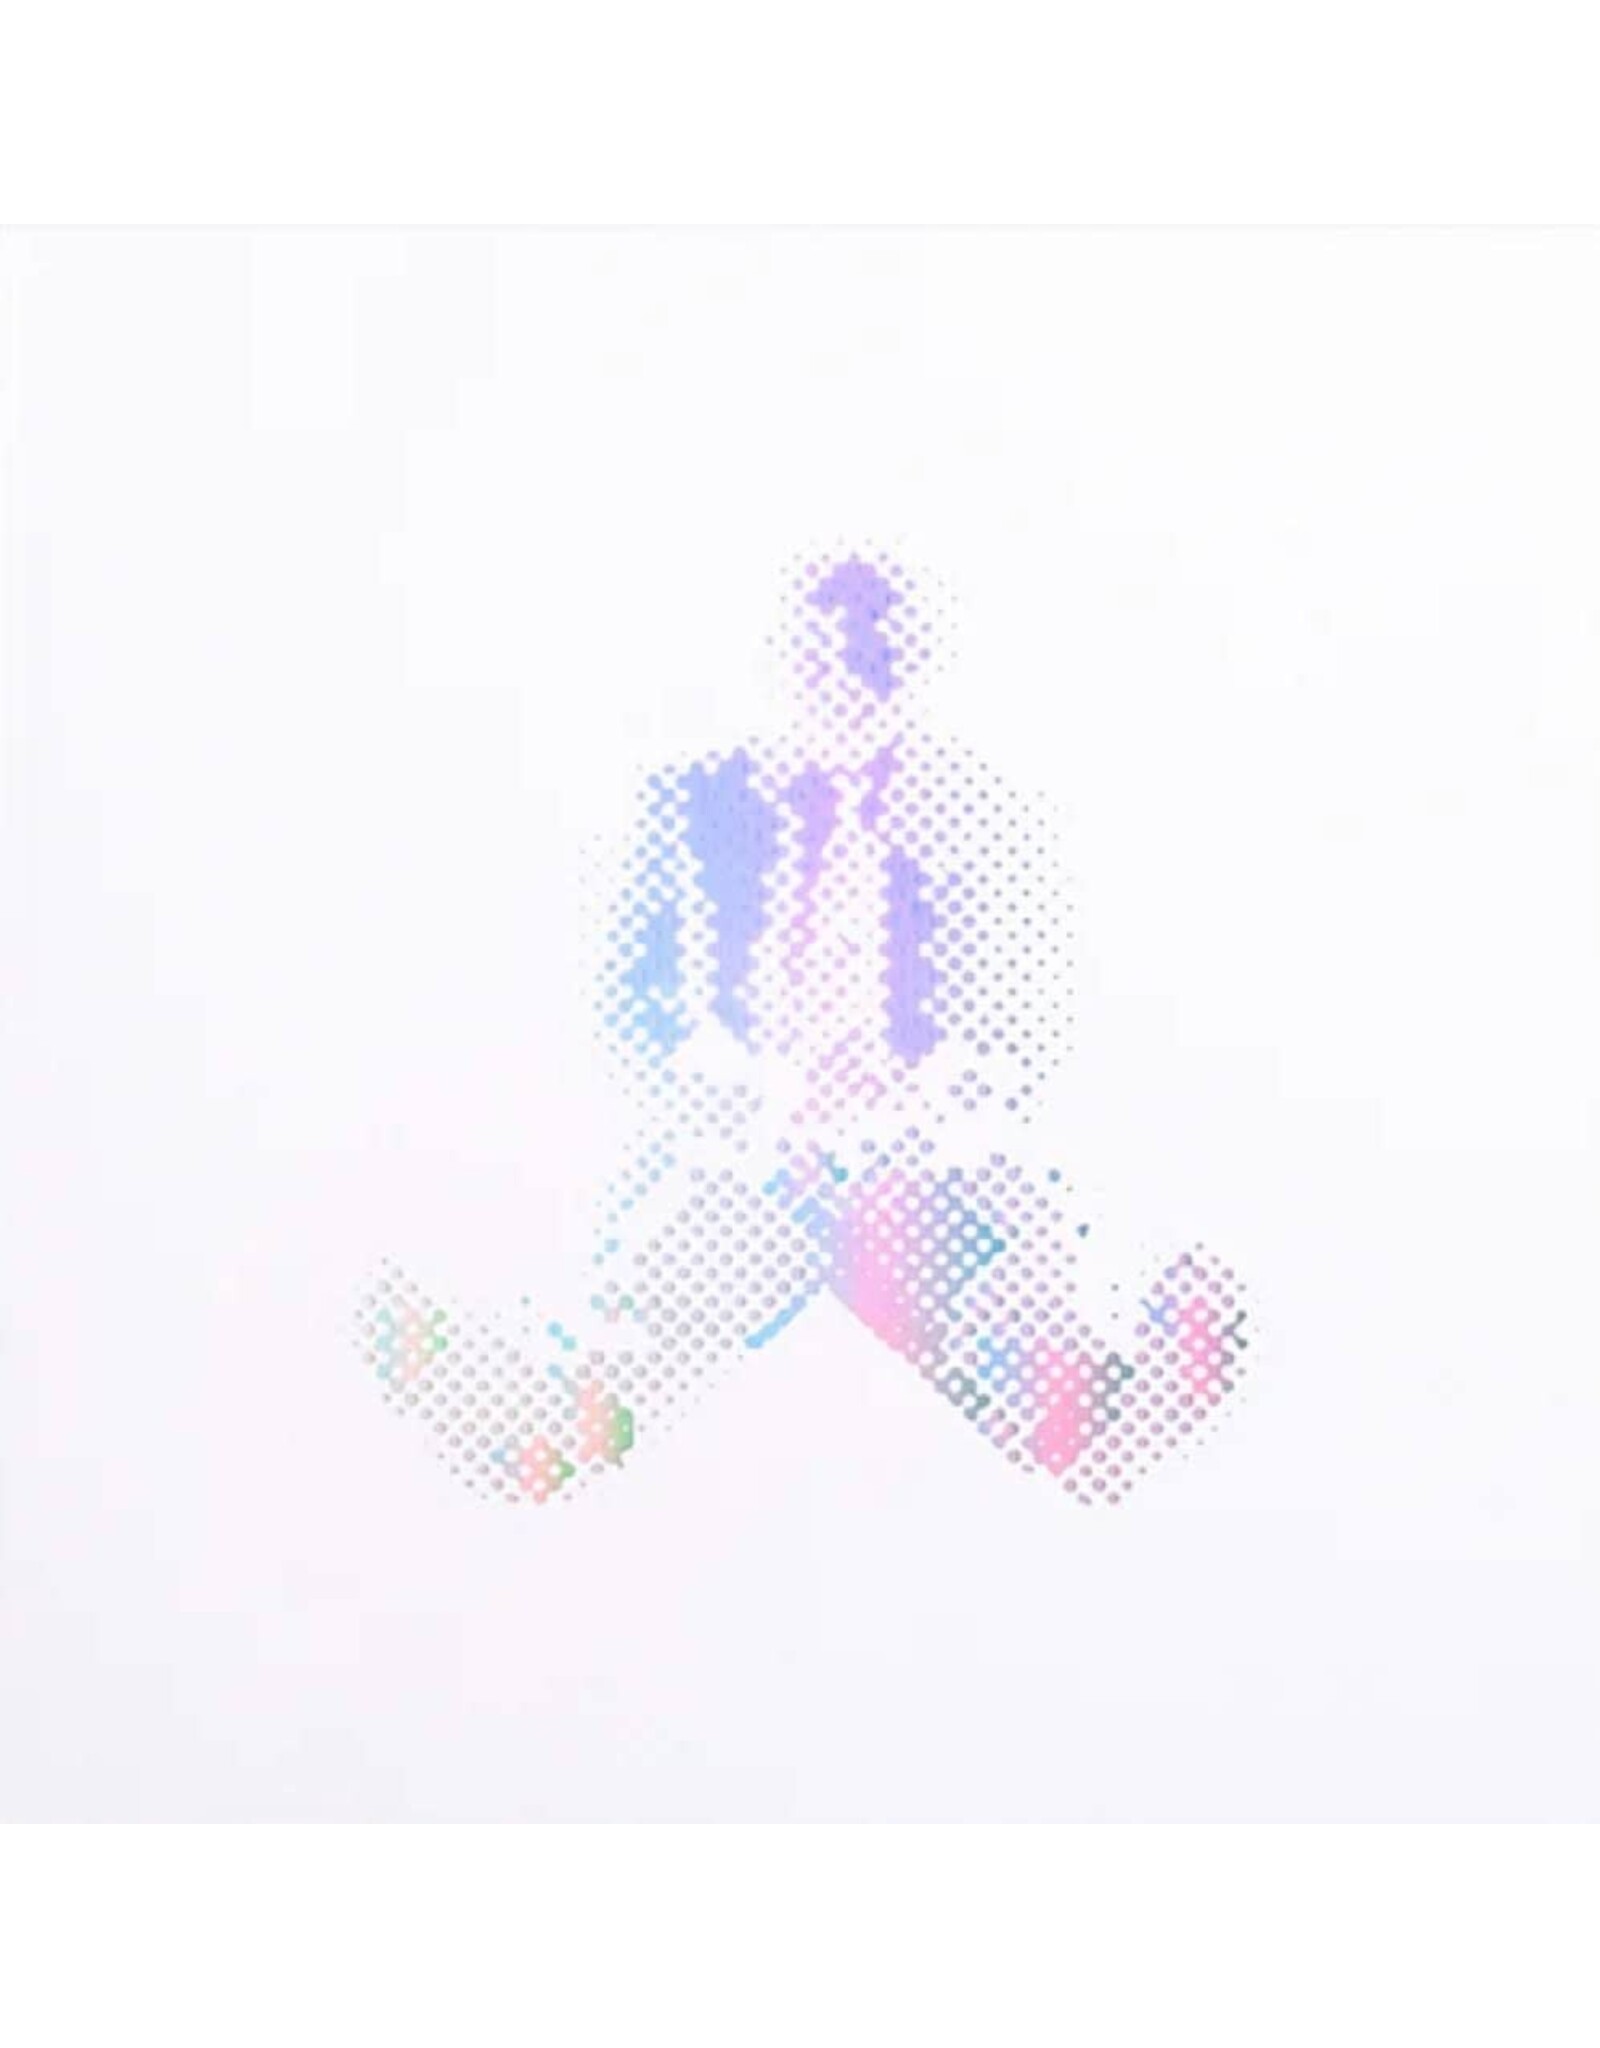 Mac Miller - Swimming (5th Anniversary) [Pink / Blue Vinyl]